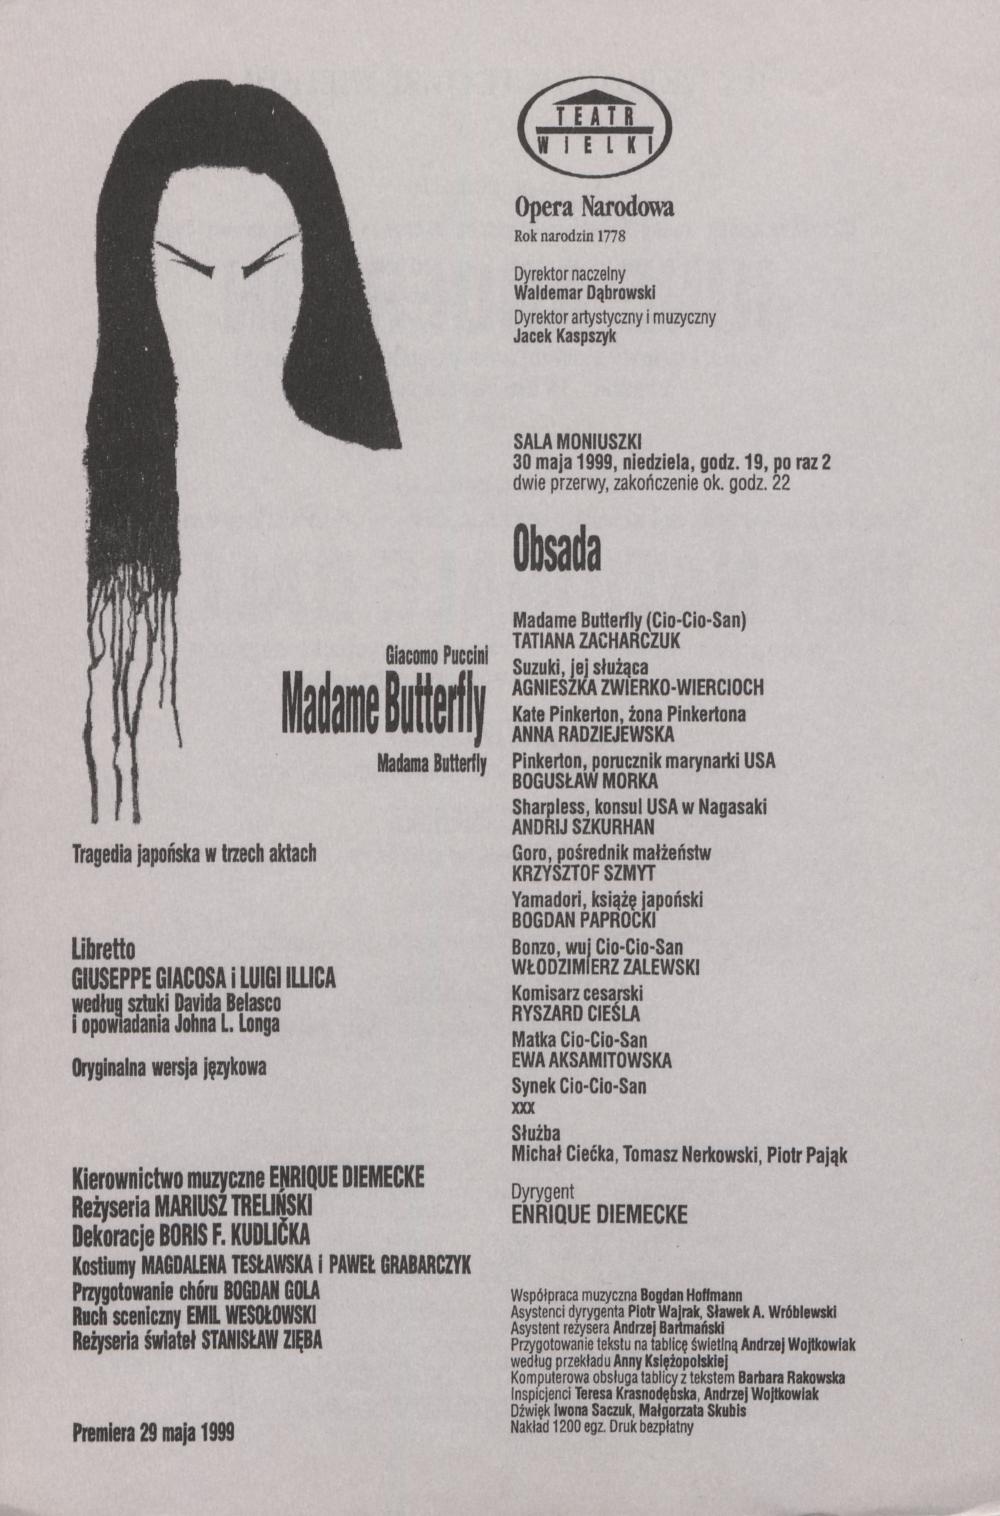 Wkładka obsadowa „Madame Butterfly” Giacomo Puccini 30-05-1999